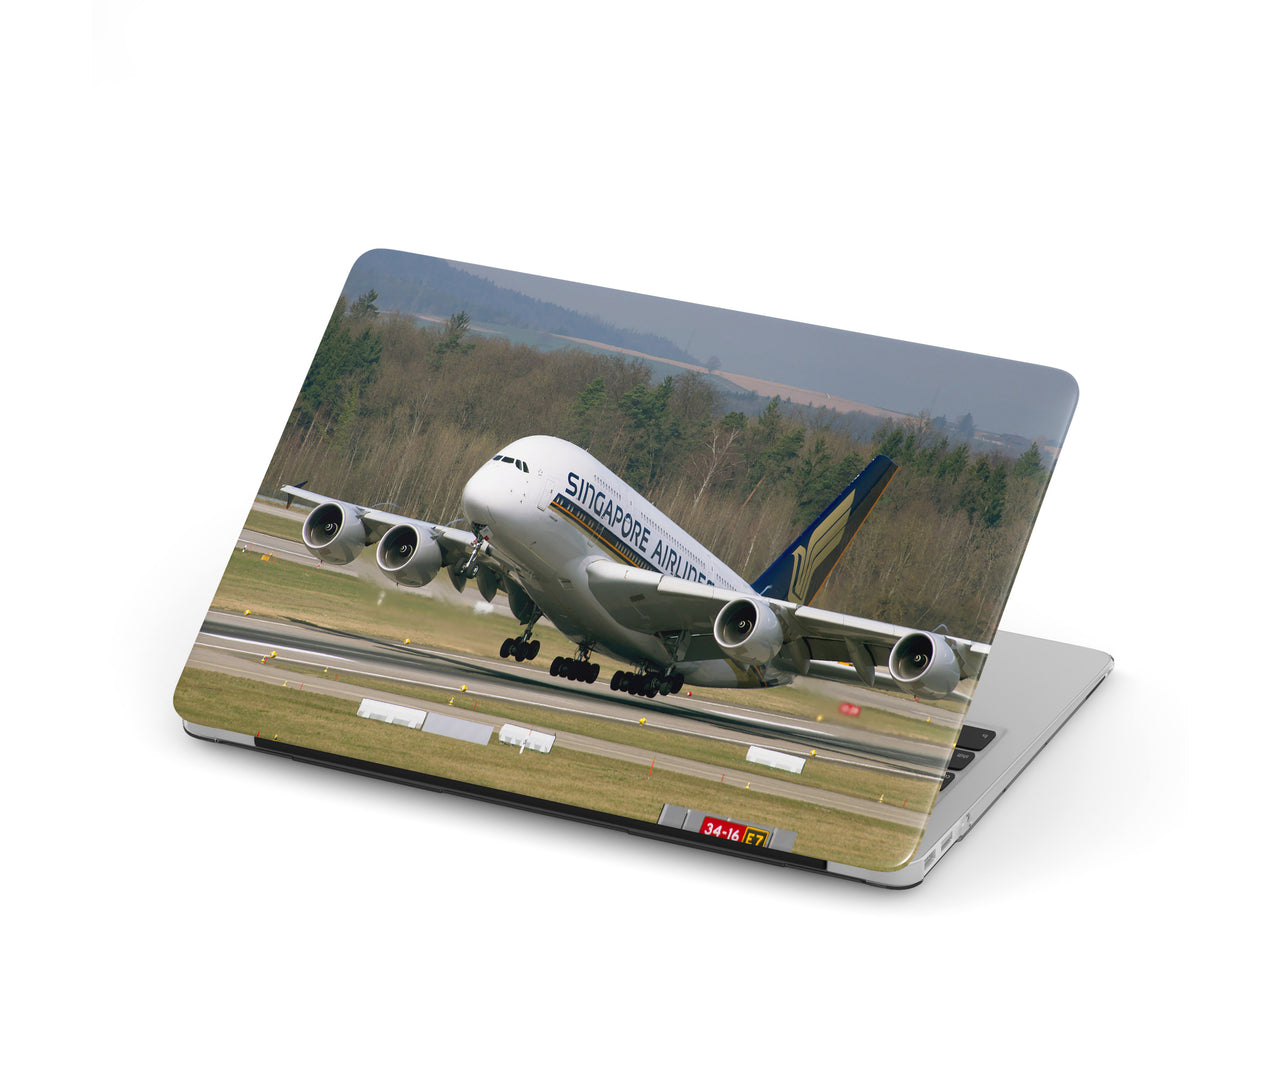 Departing Singapore Airlines A380 Designed Macbook Cases